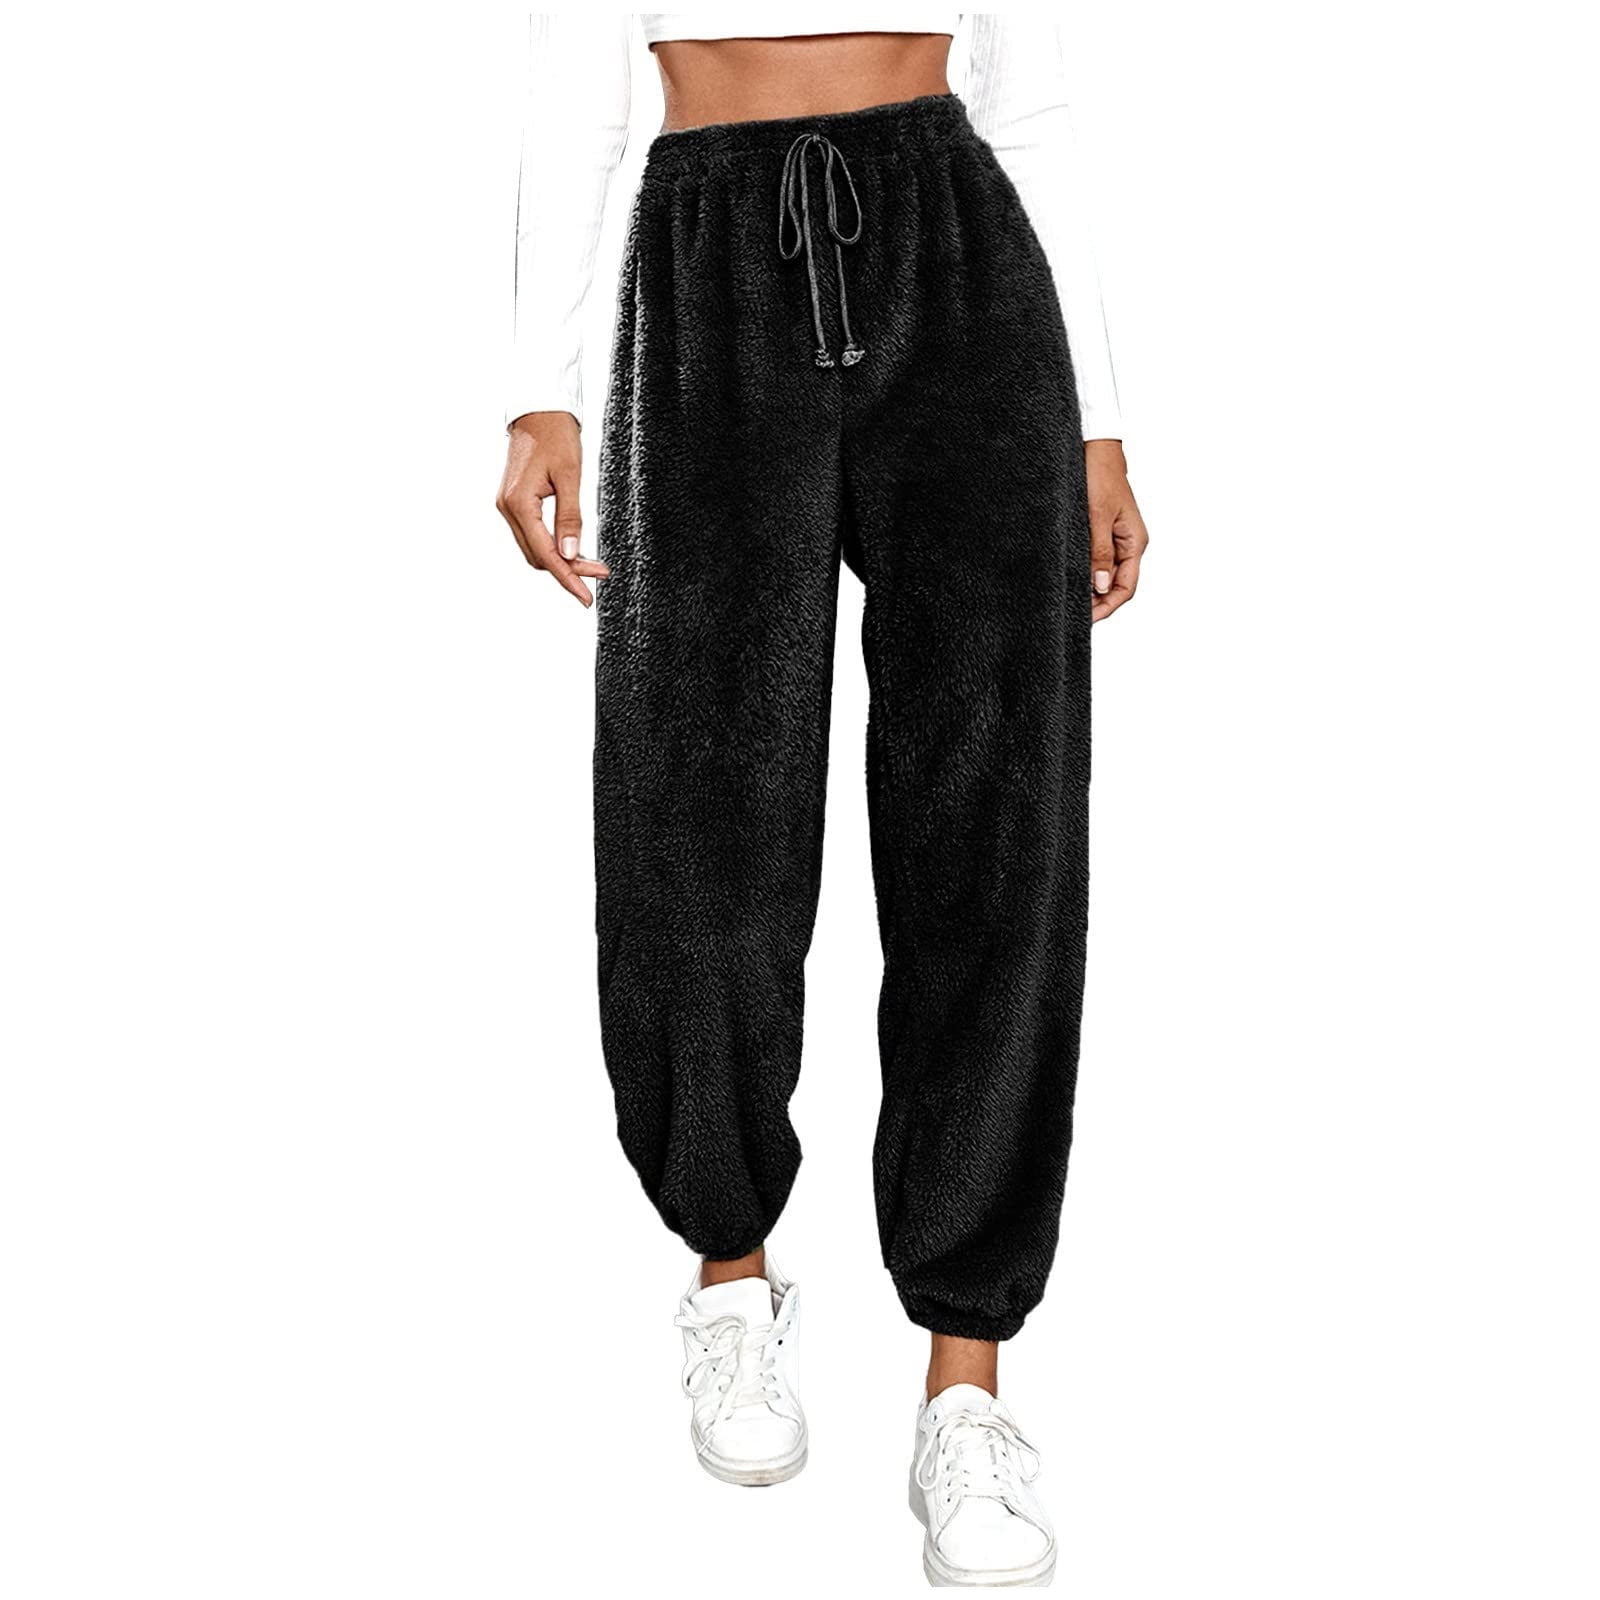 Hfyihgf Women's Fuzzy Fleece Sweatpants Baggy Cinch Bottom Lounge Pants  Drawstring Trendy Casual Athletic Joggers with Pockets(Black,XXL) 